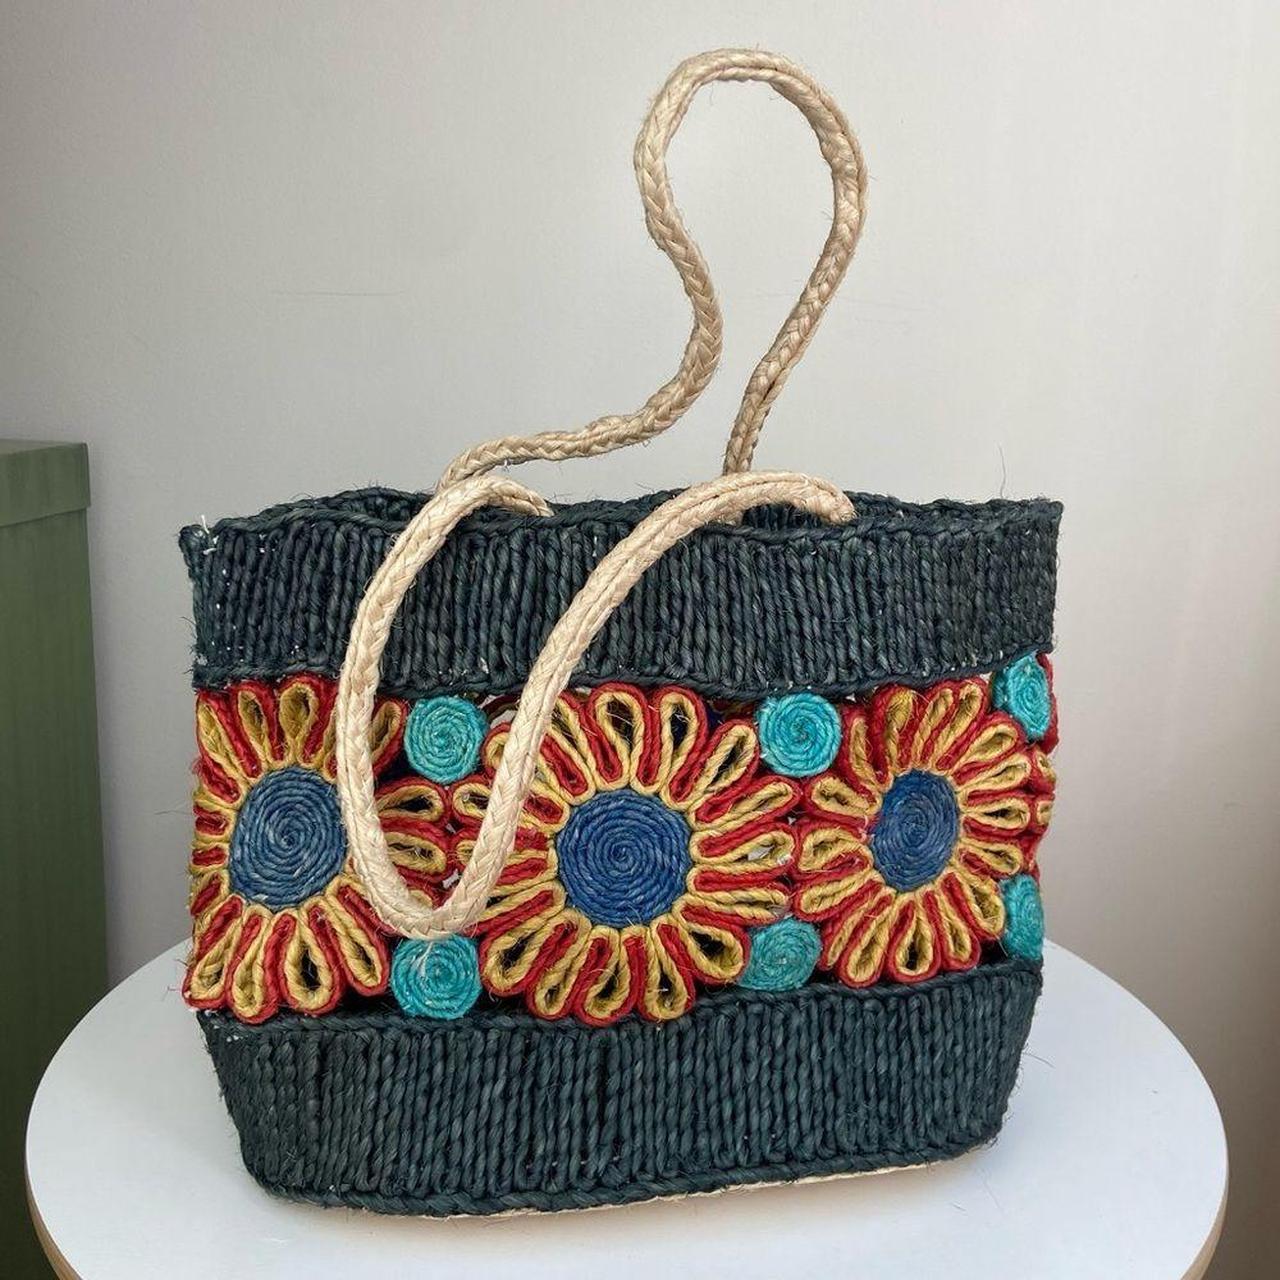 RidgyDidge Designs WA; custom bags & purses handmade by Vicki Hallett